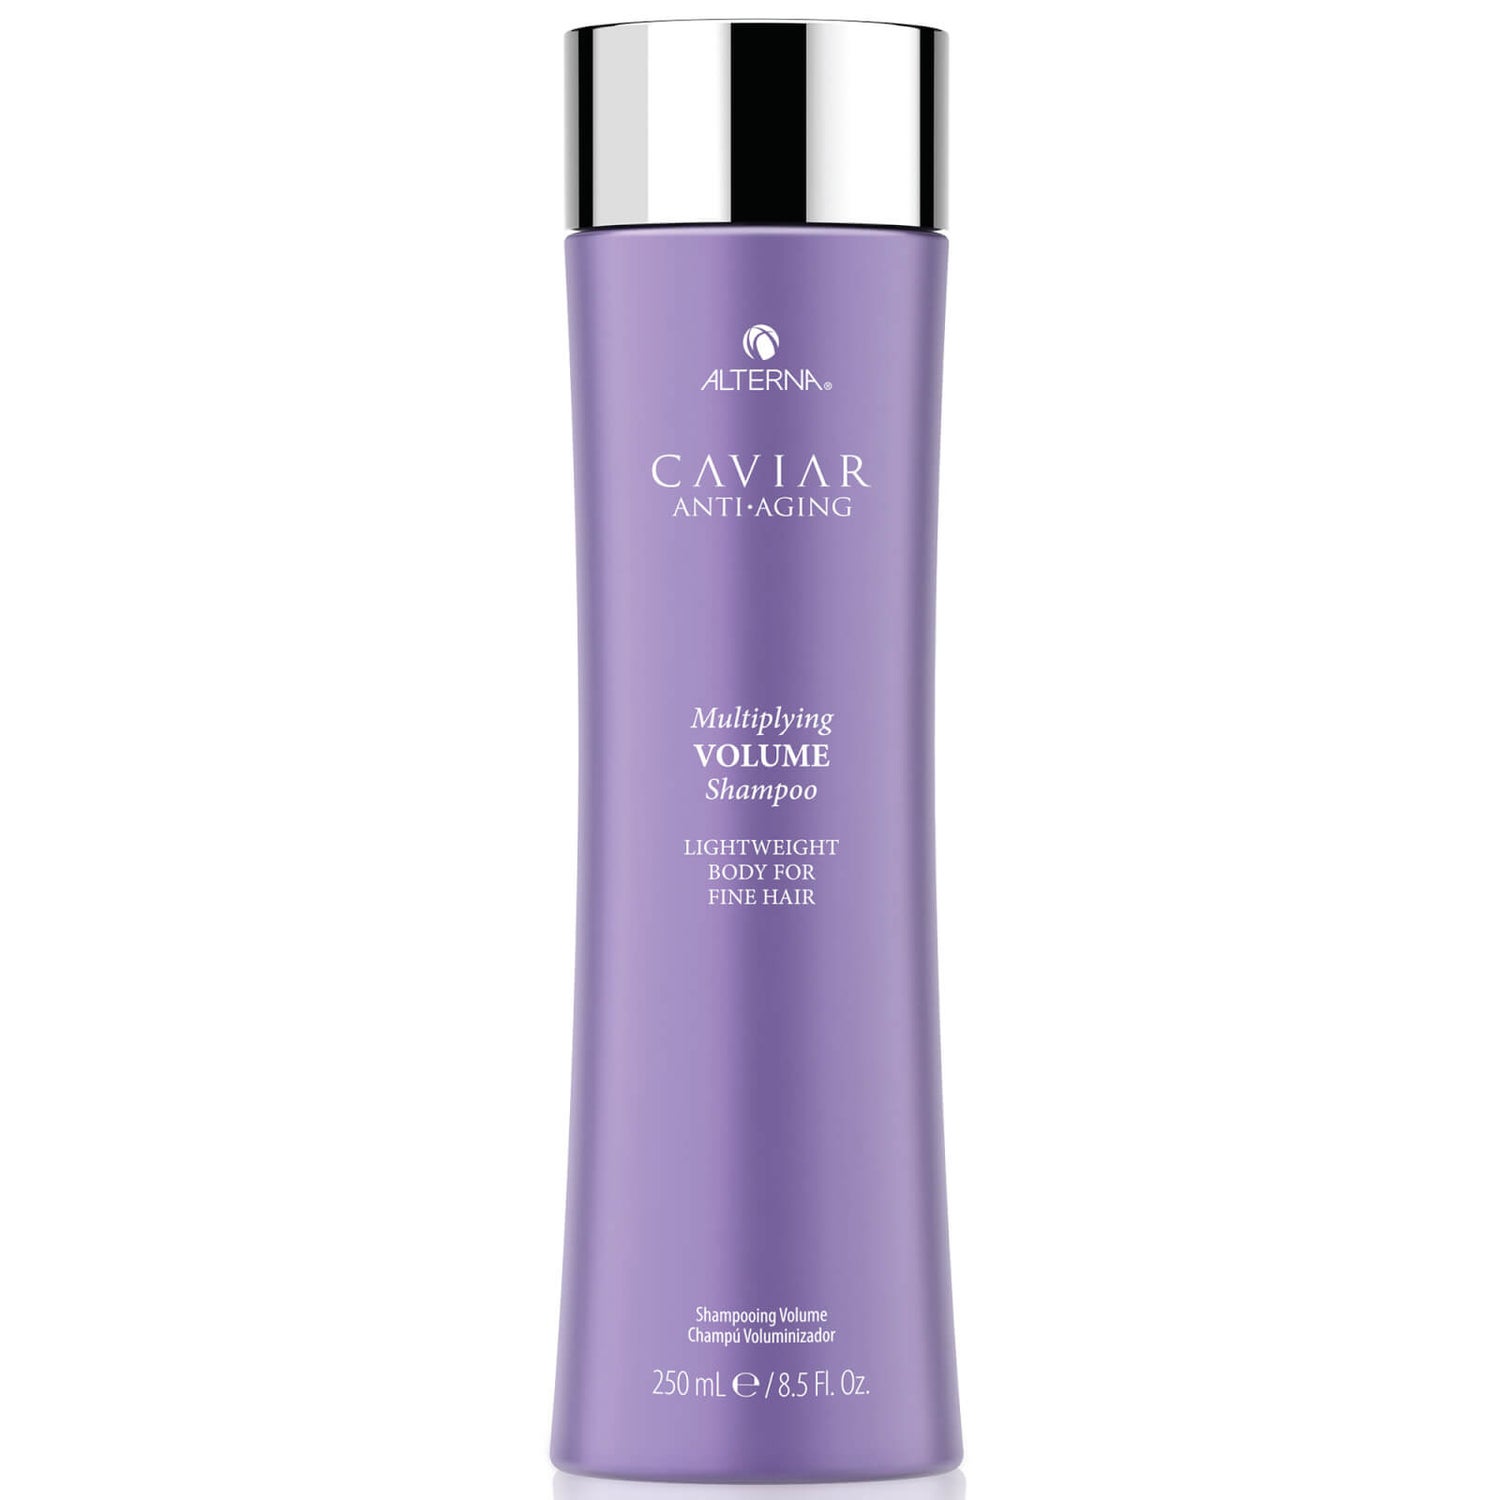 Alterna Caviar Anti-ageing Seasilk Volume Shampoo (250ml)